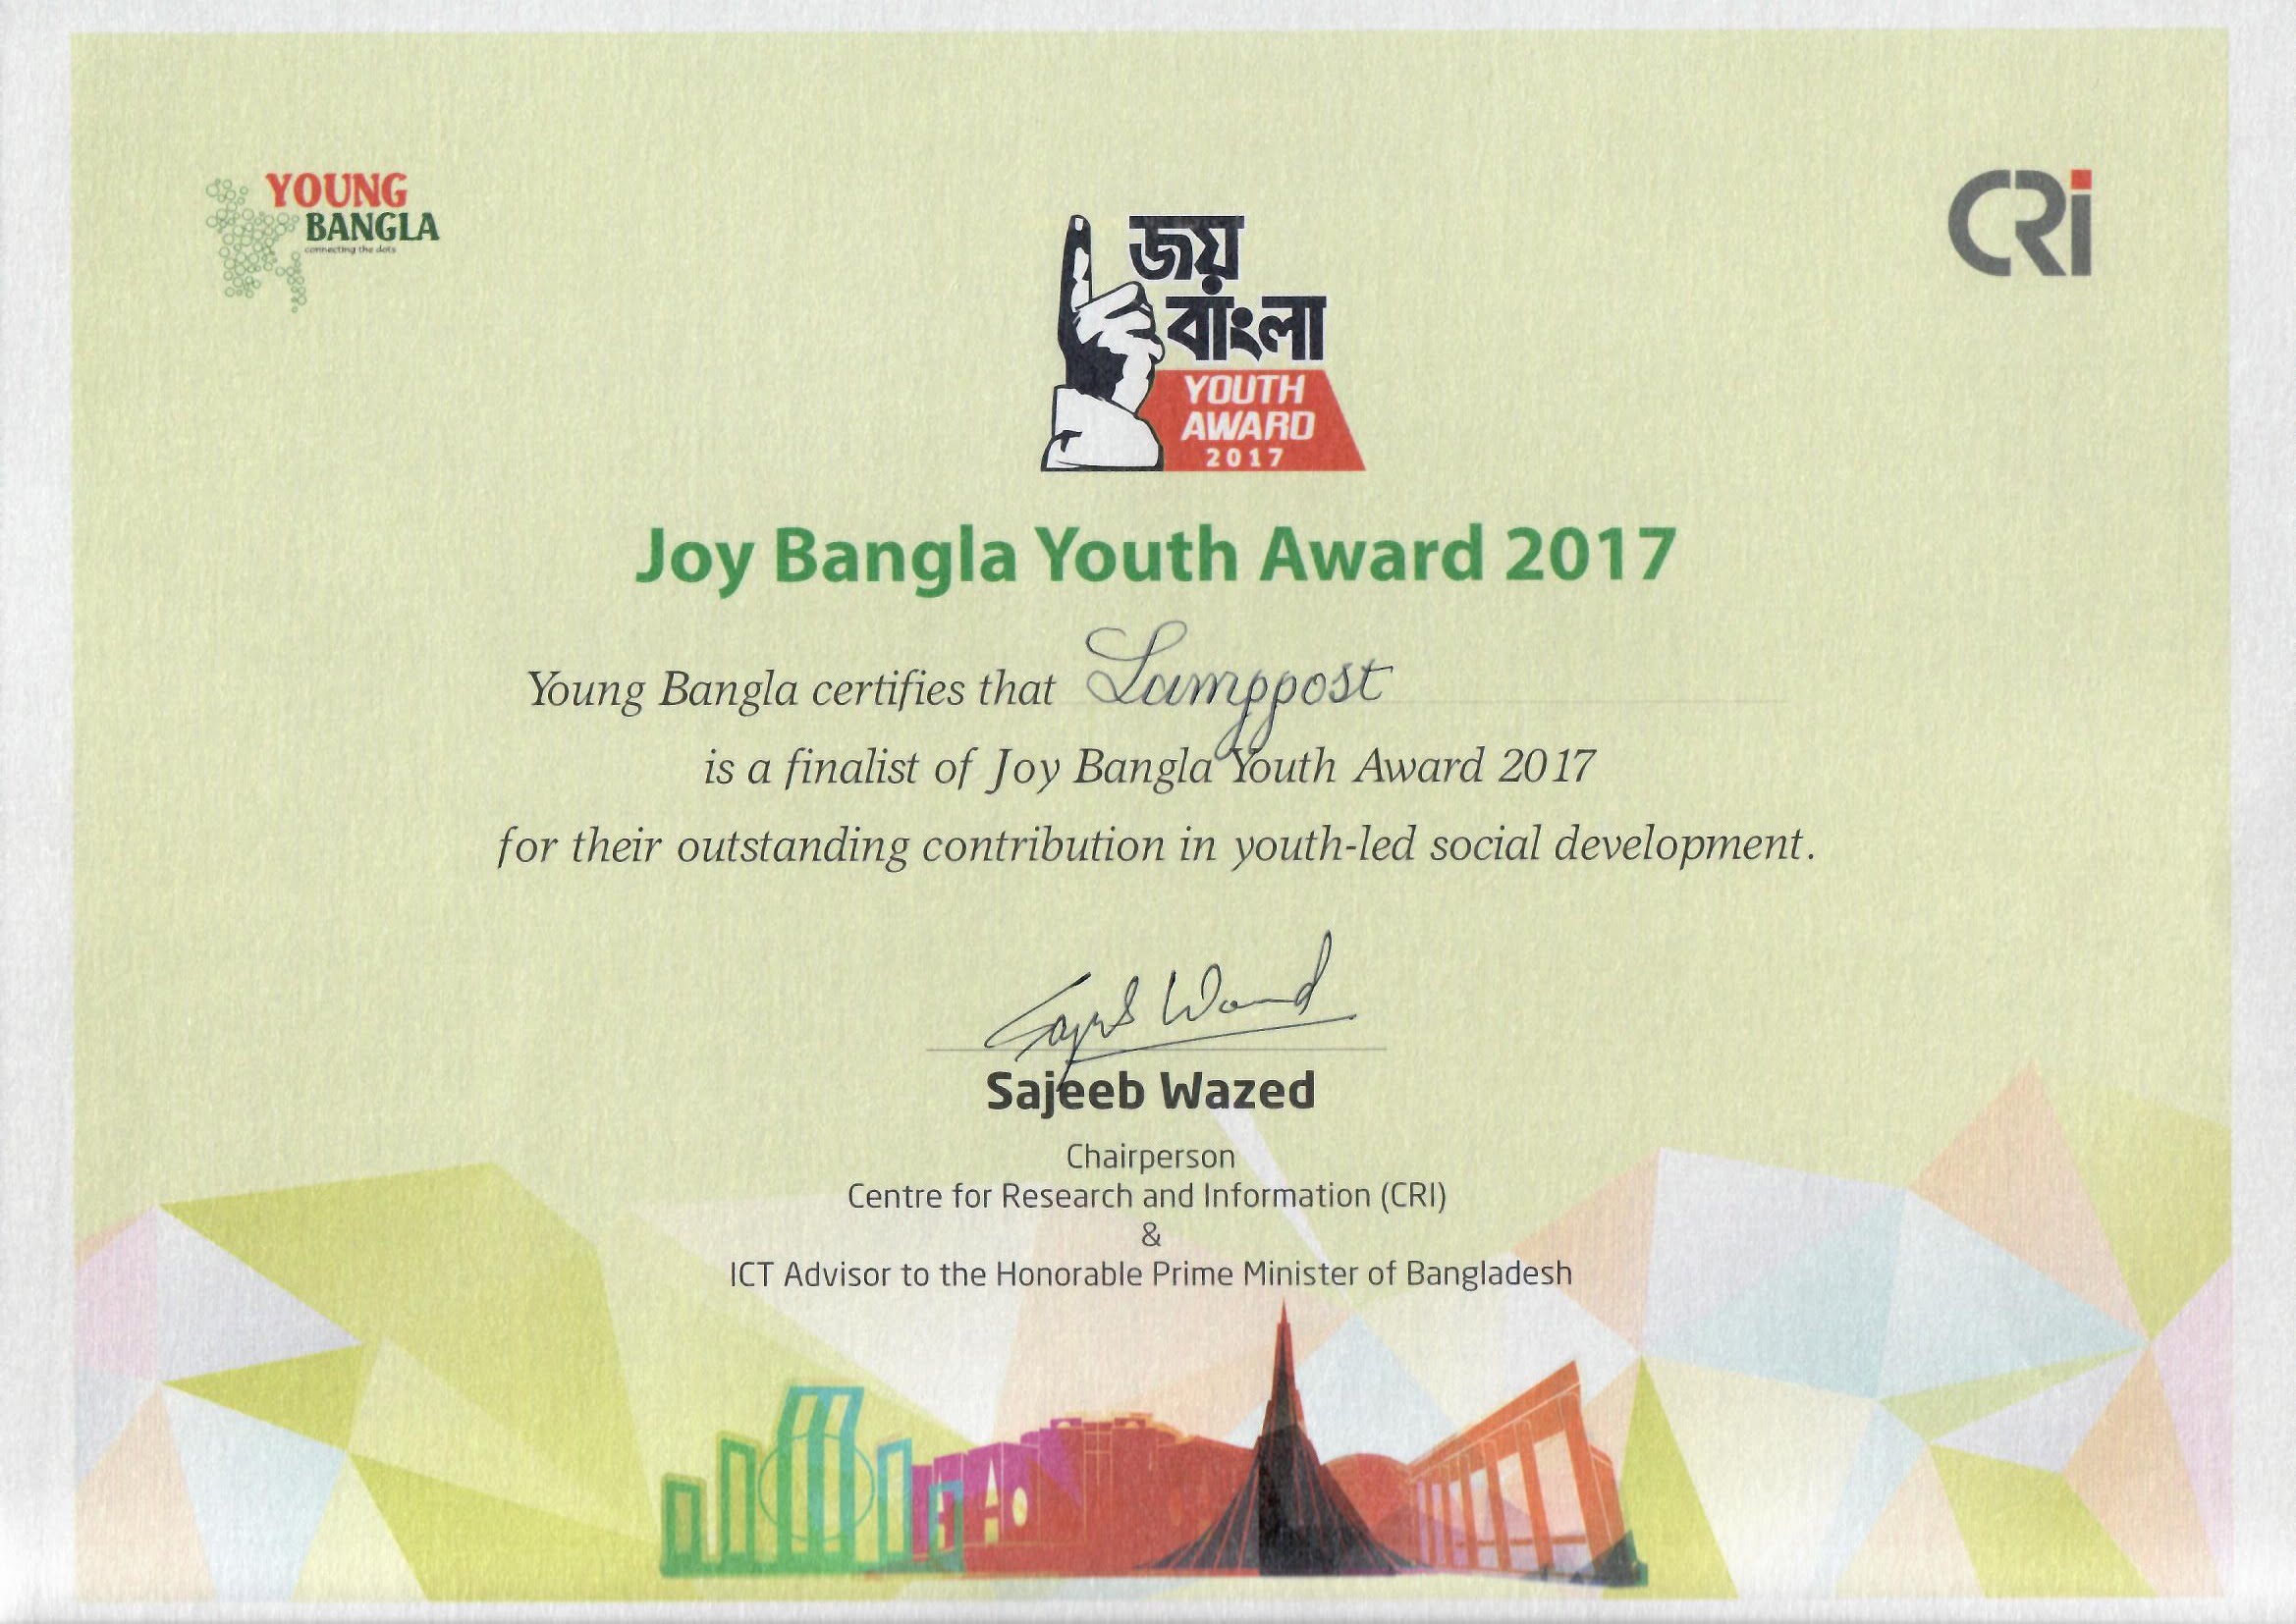 National Youth Award